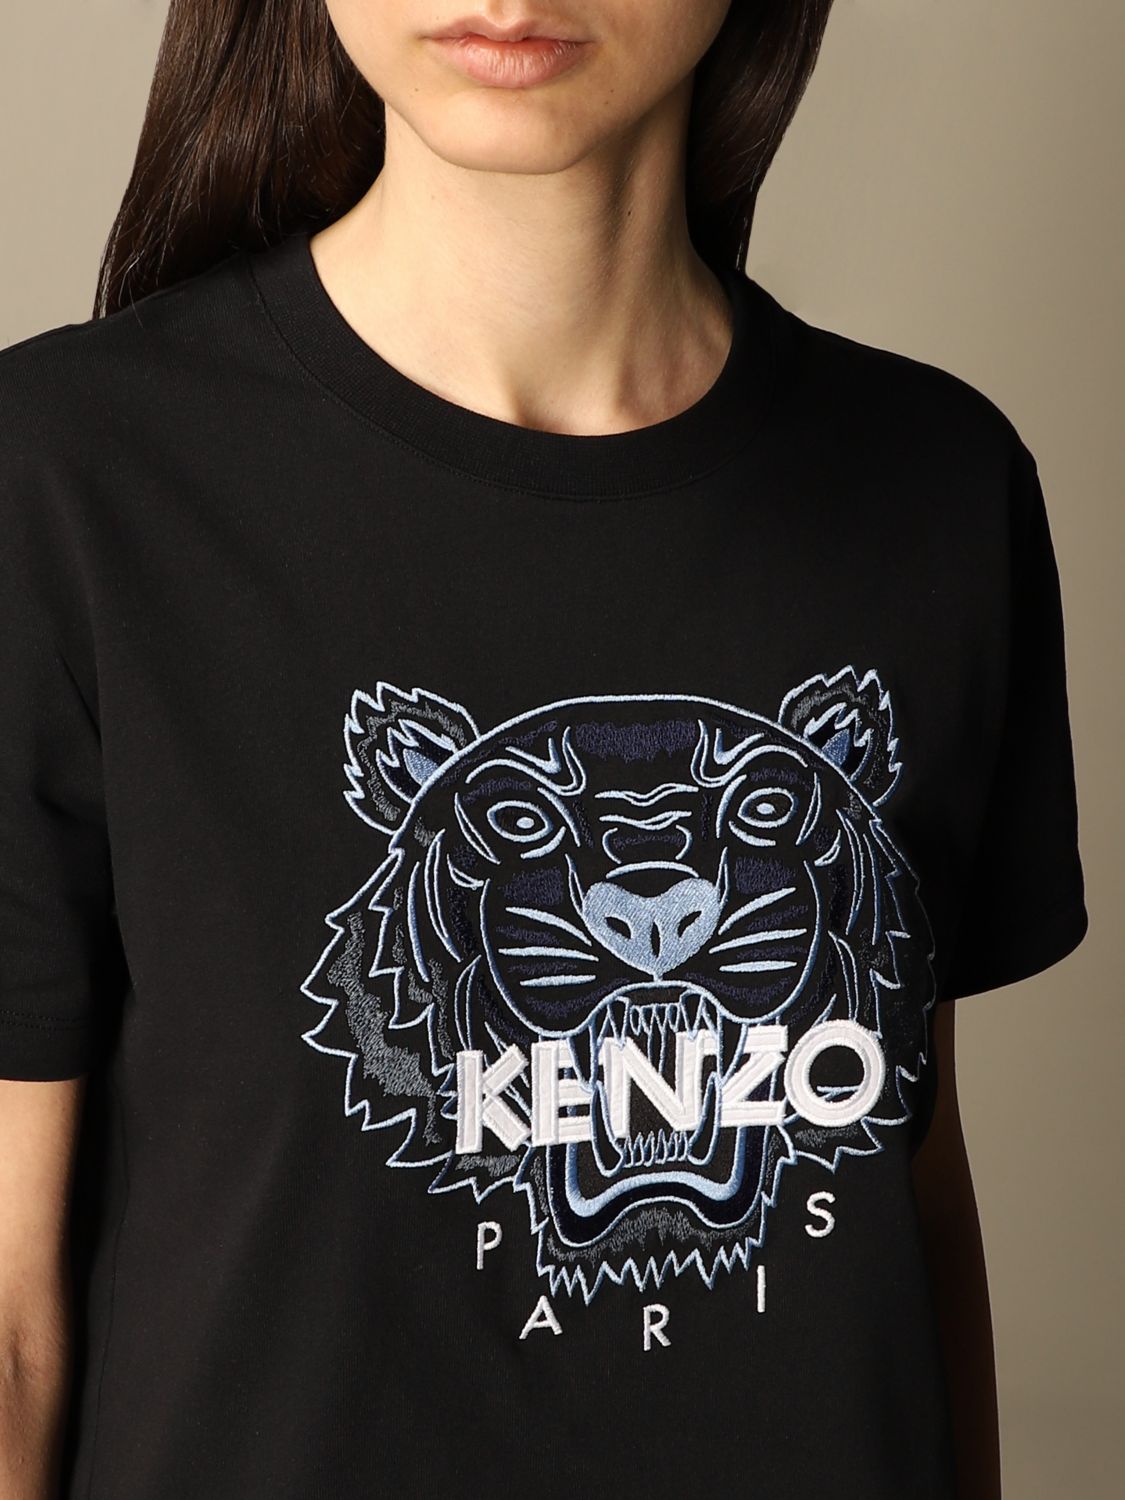 kenzo t shirt black friday